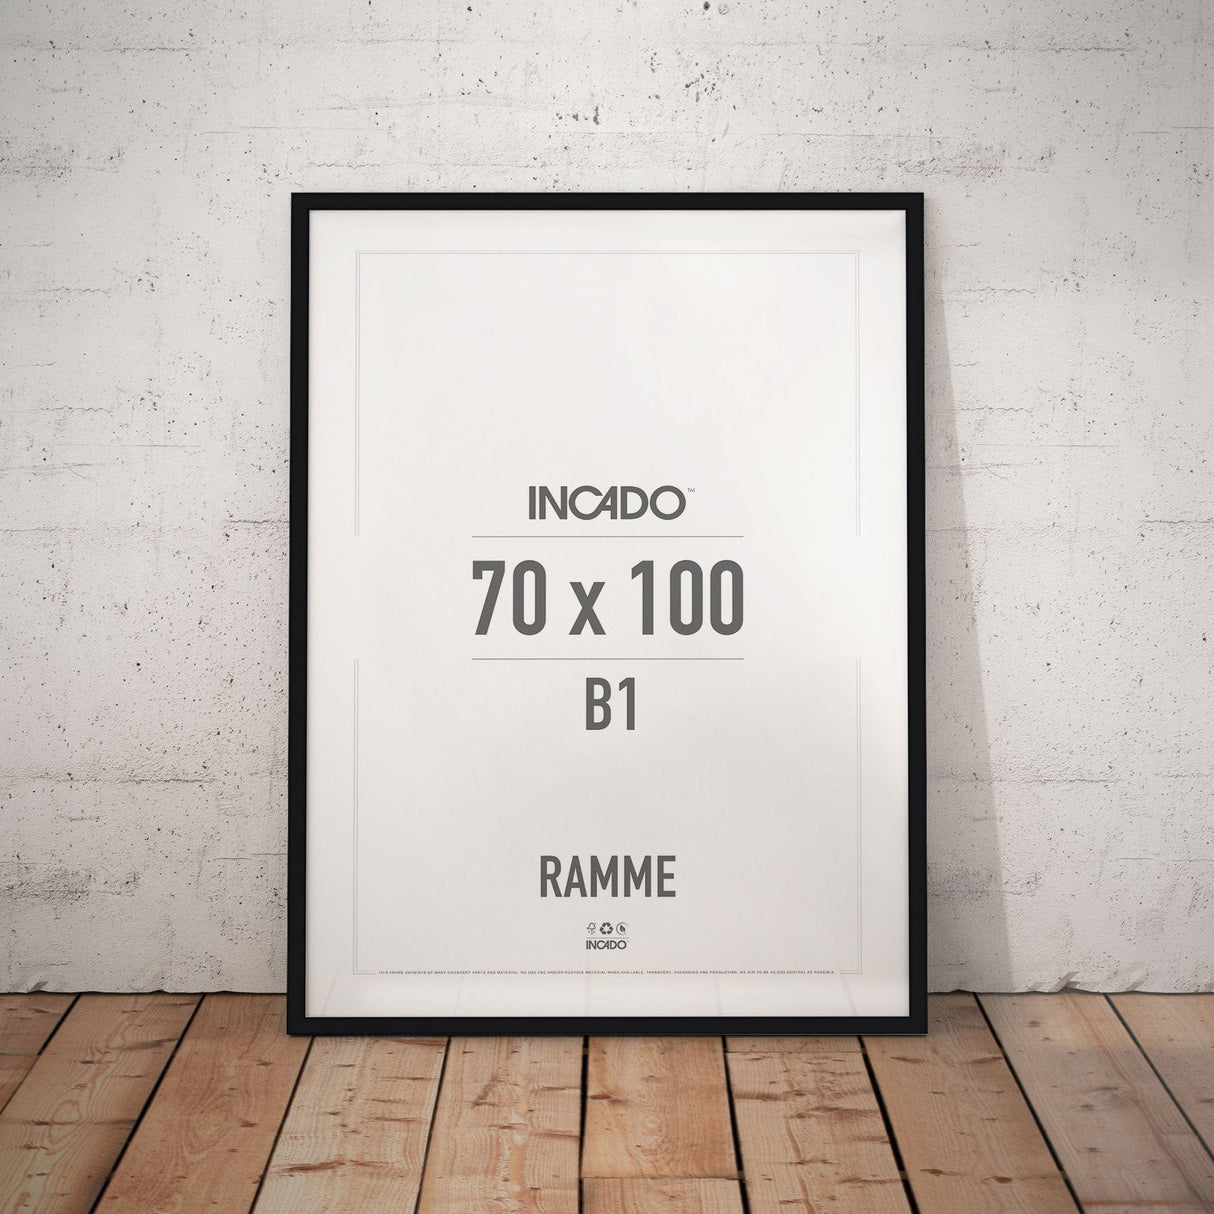 Sort Ramme - Incado NordicLine - 70 x 100 cm